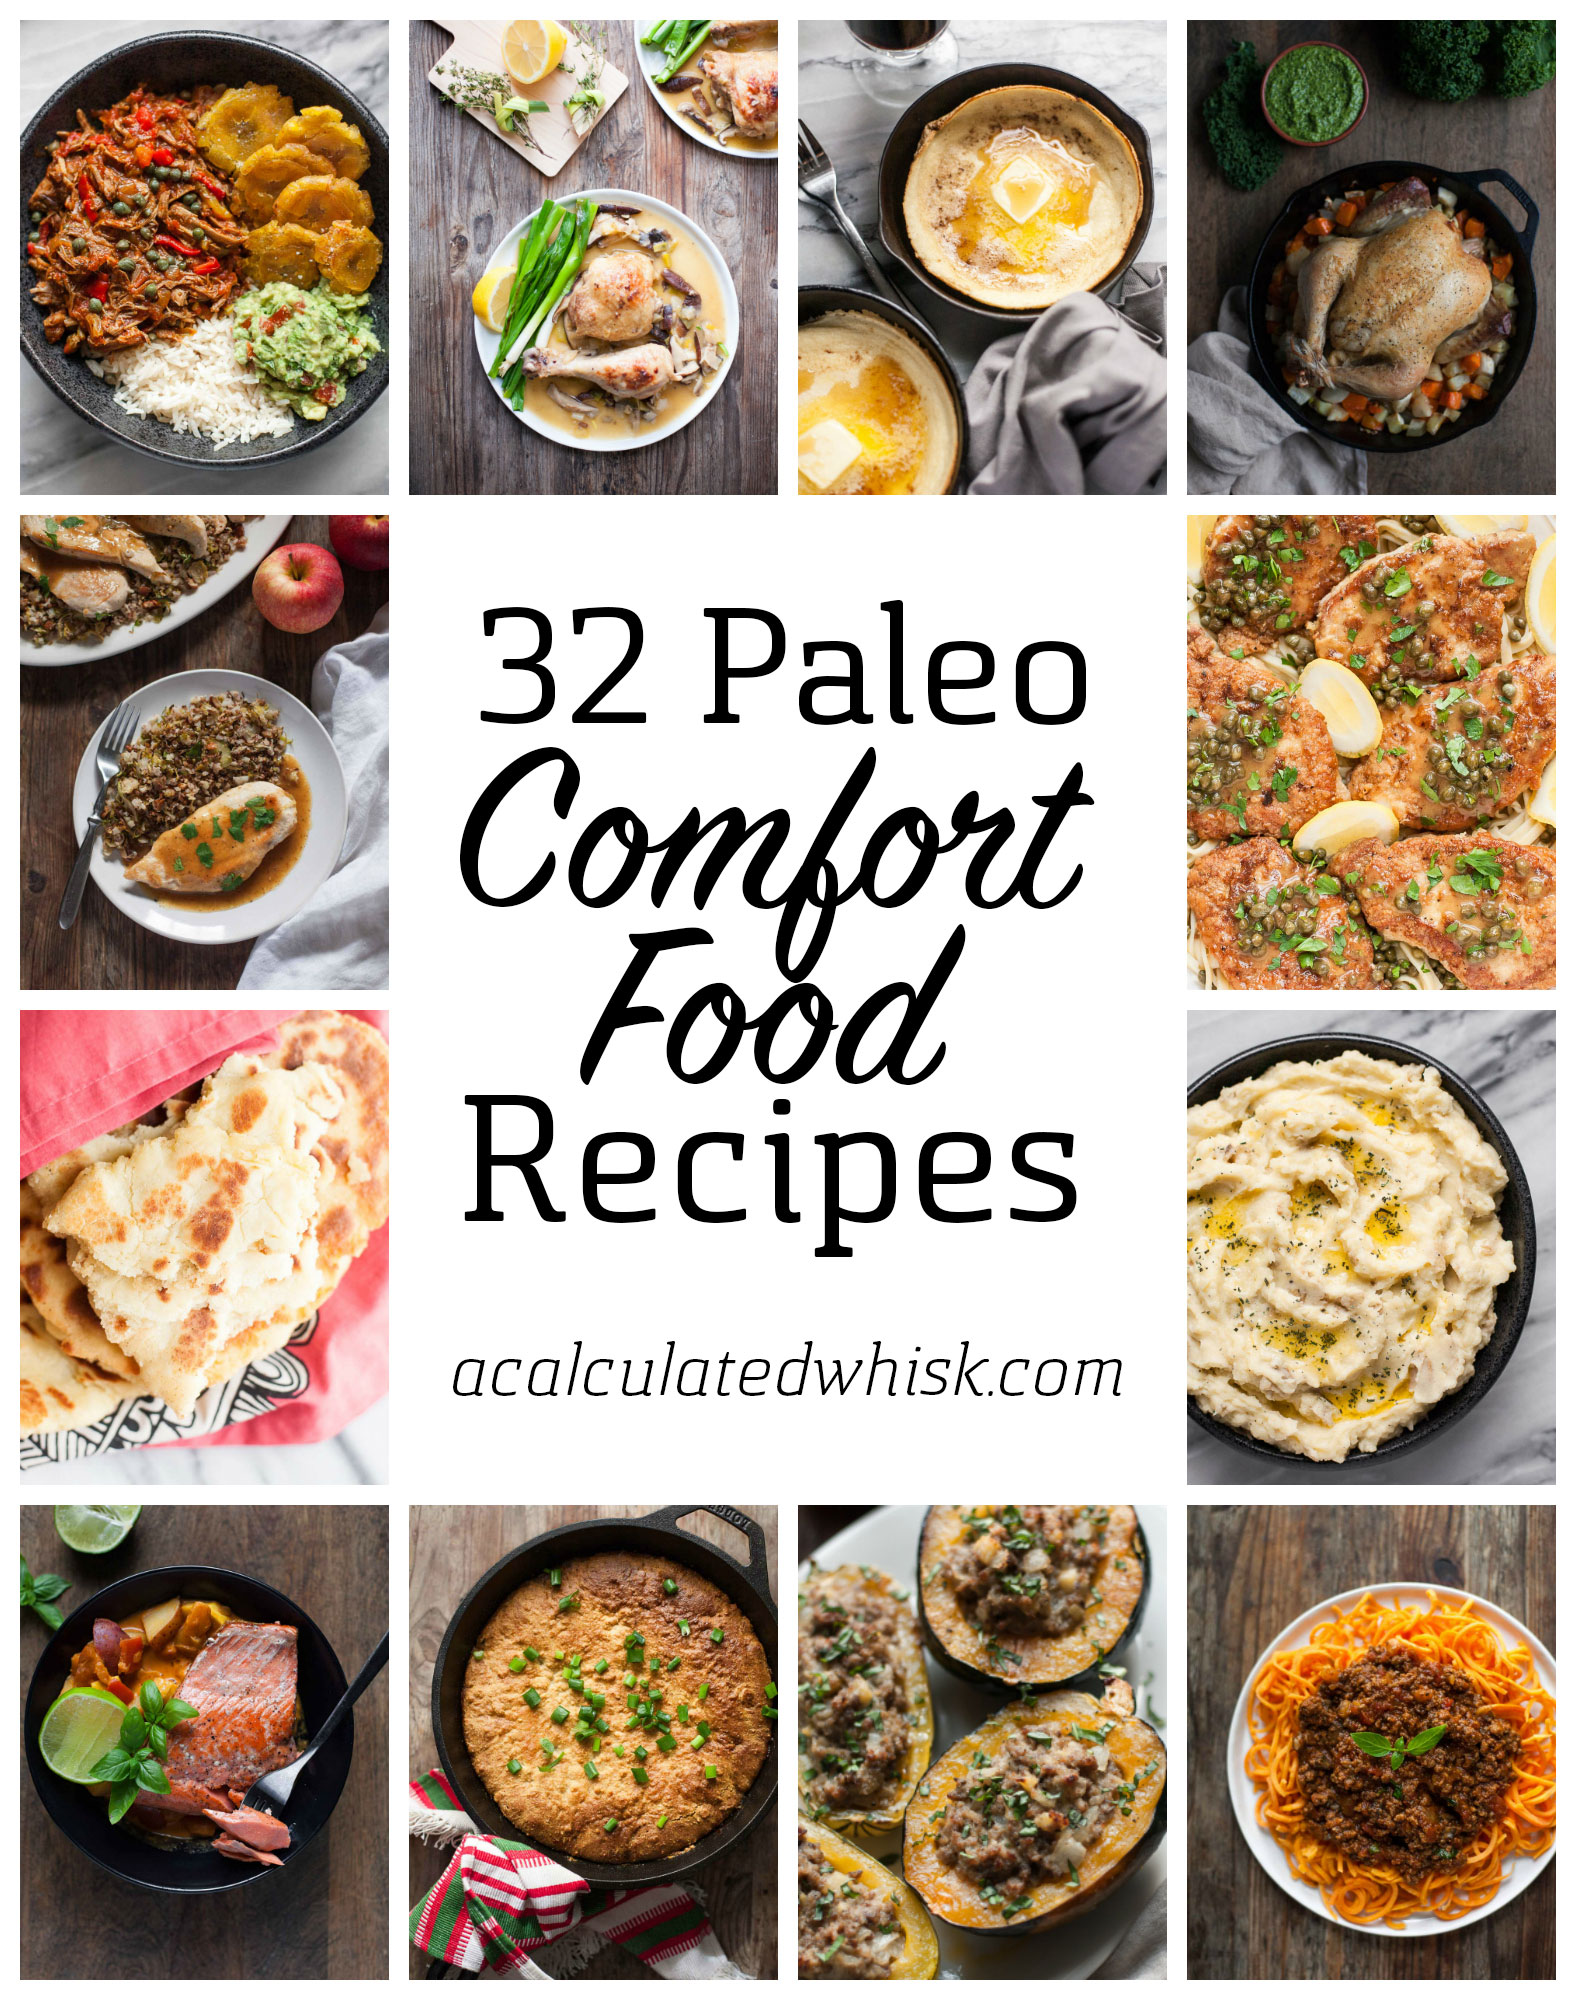 32 Paleo Comfort Food Recipes for Winter